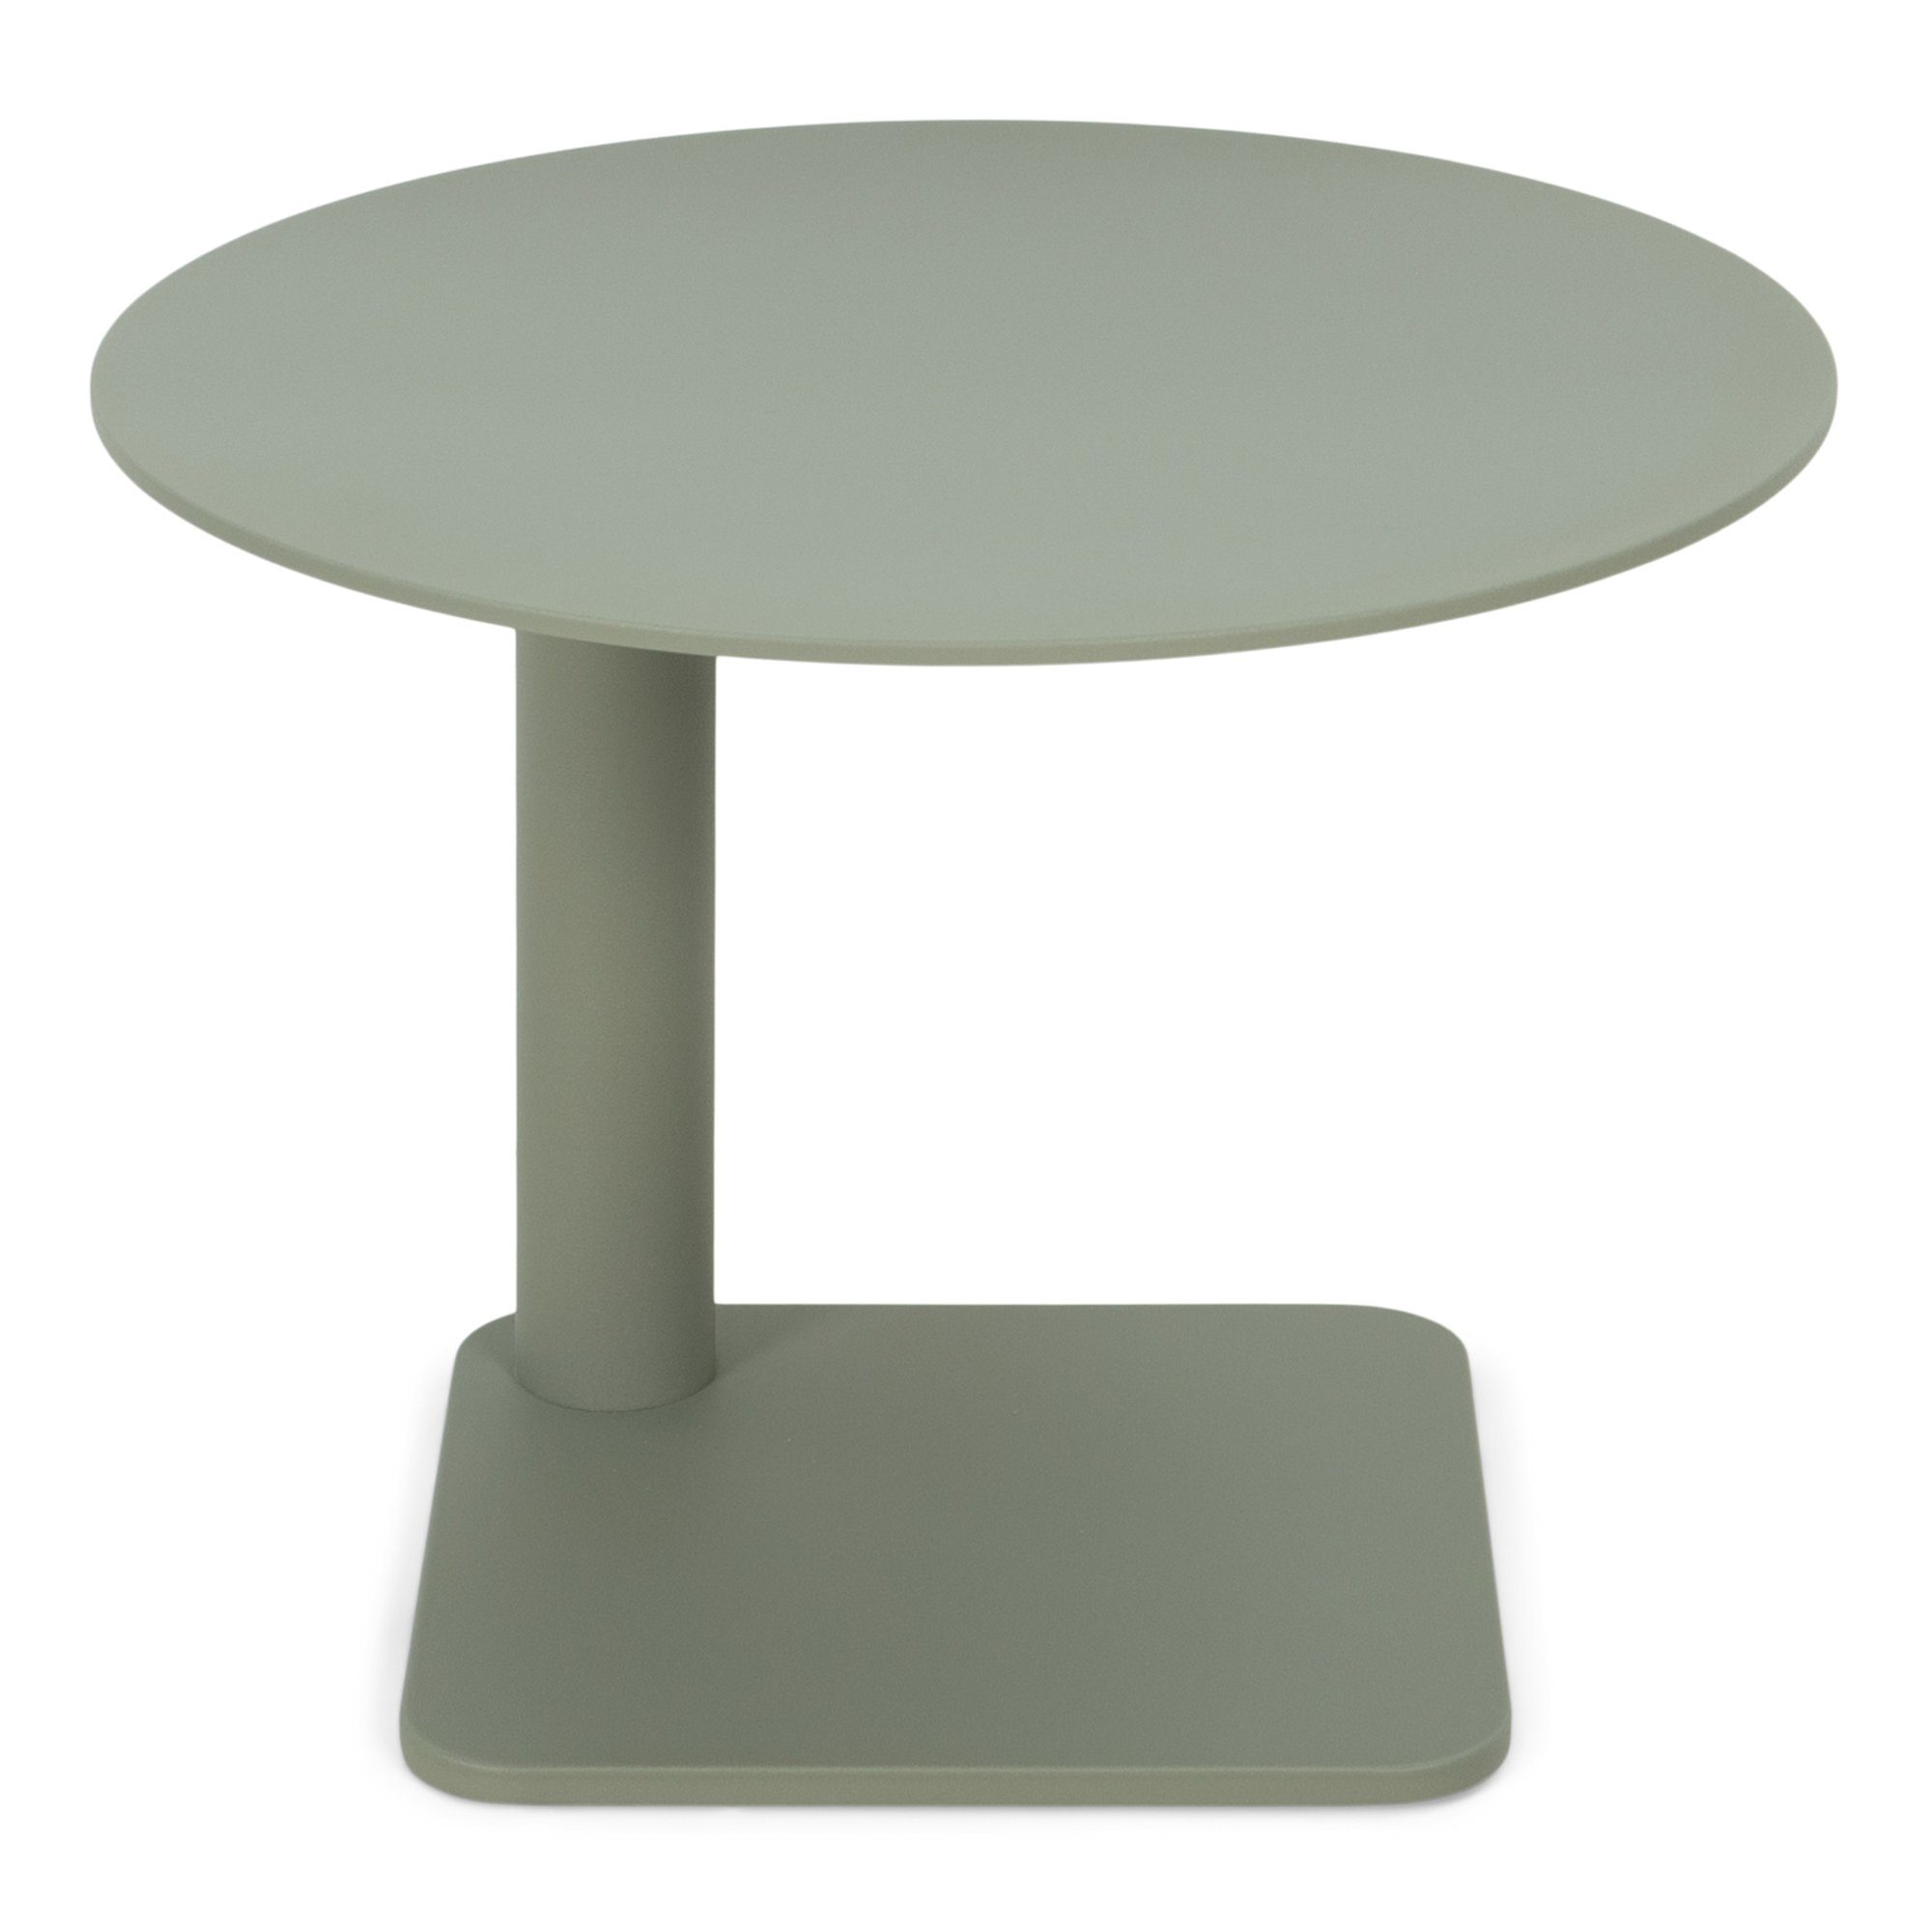 [Beliebtes neues Produkt!] Torna Design Furniture 40x30x40cm Beistelltisch Beistelltisch Torna - SUNSET Sand 30